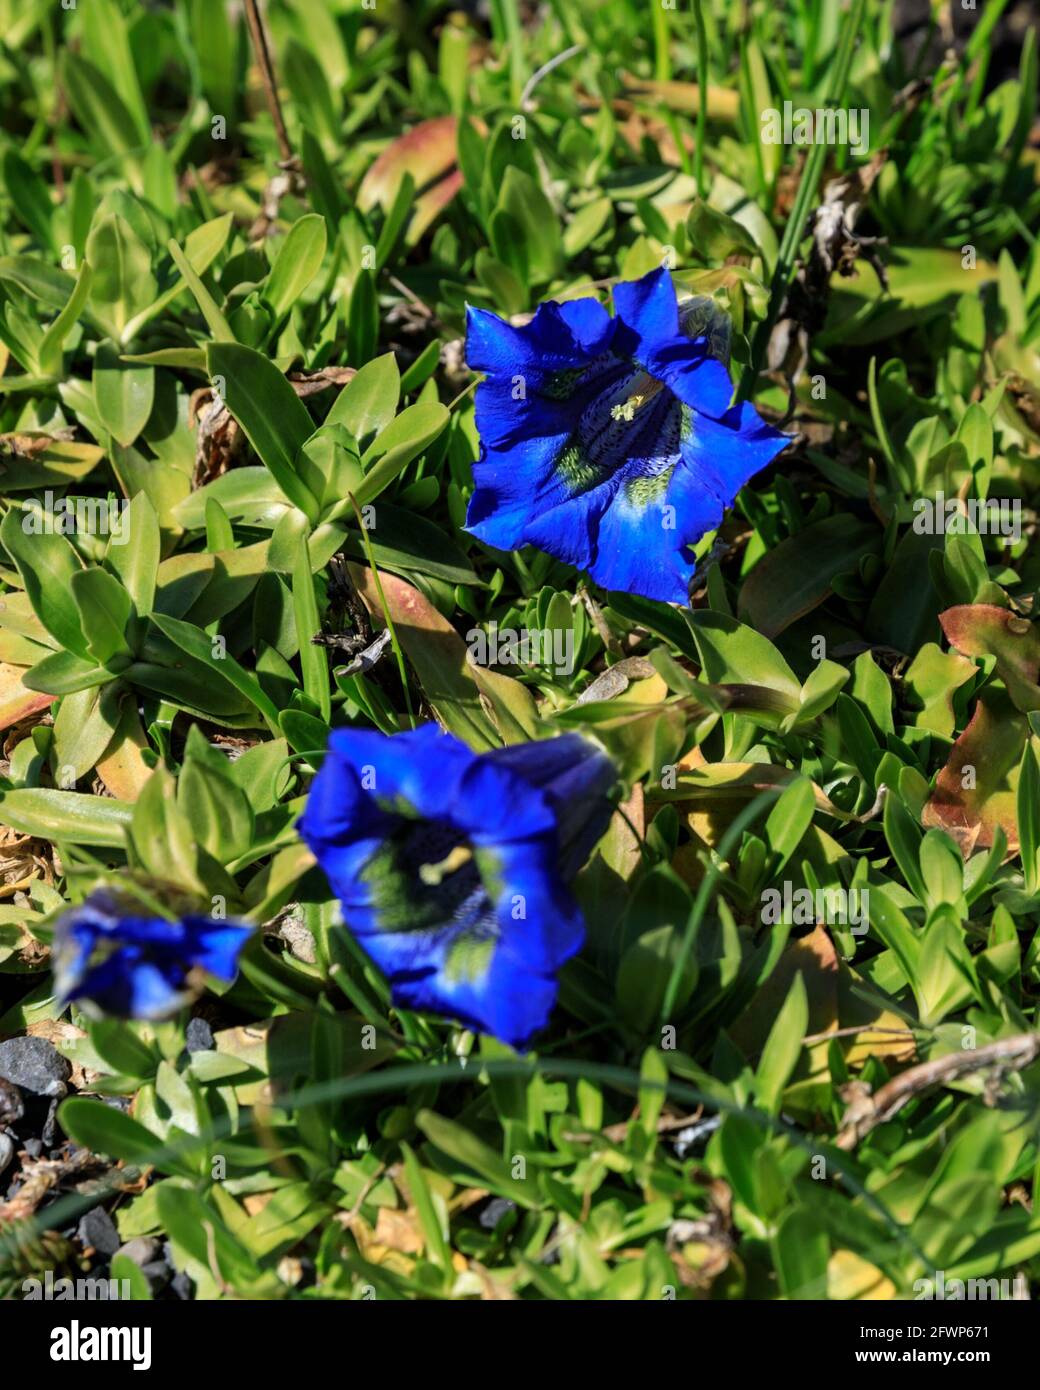 Gentiana angustifolia, known as stemless gentian, short-stemmed gentian or trumpet gentian, blue flowering alpine herb in bloom Stock Photo